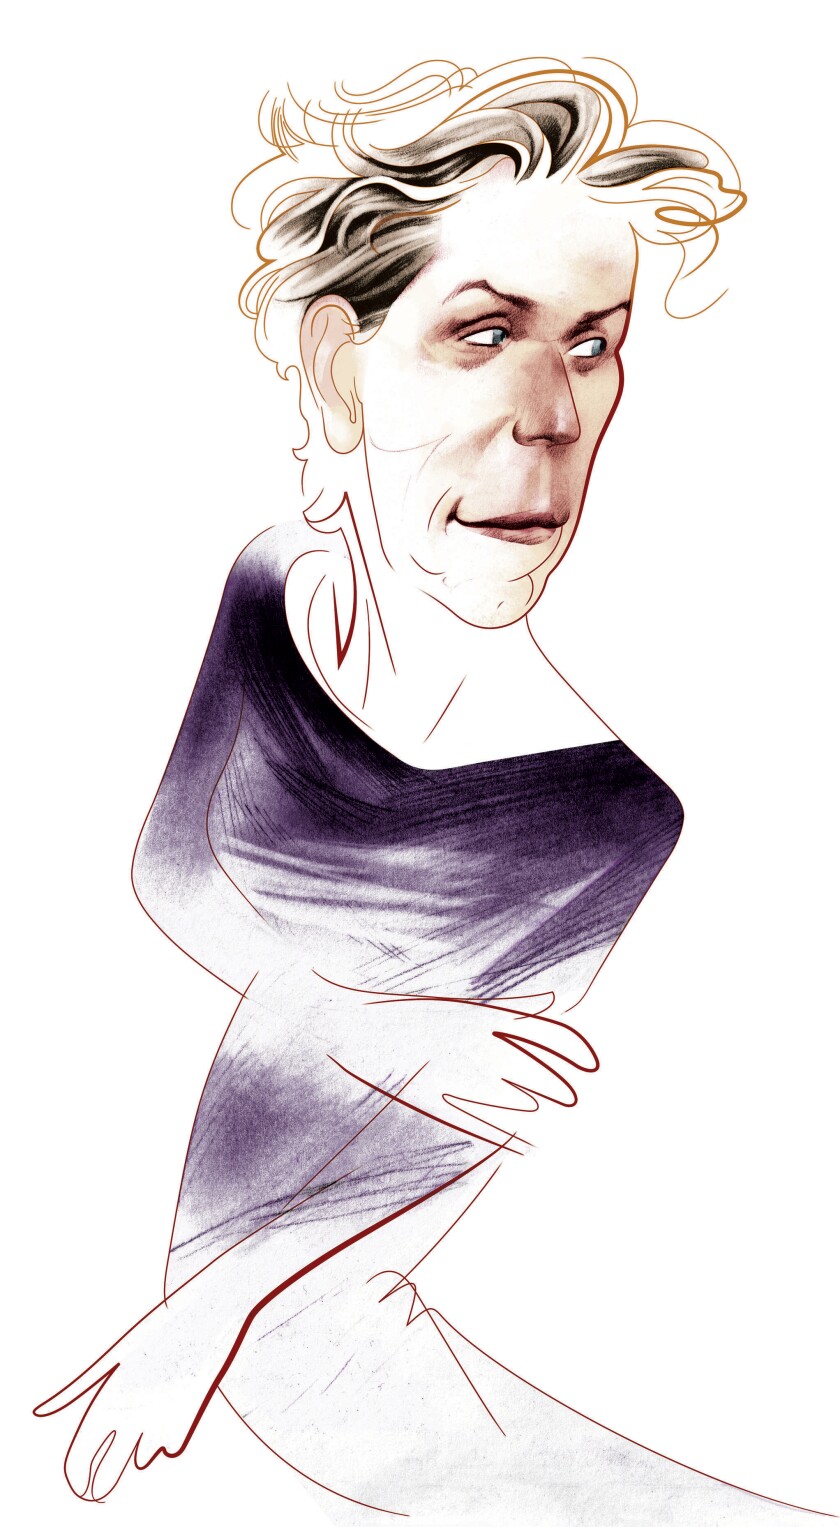 Illustration of actress Frances McDormand